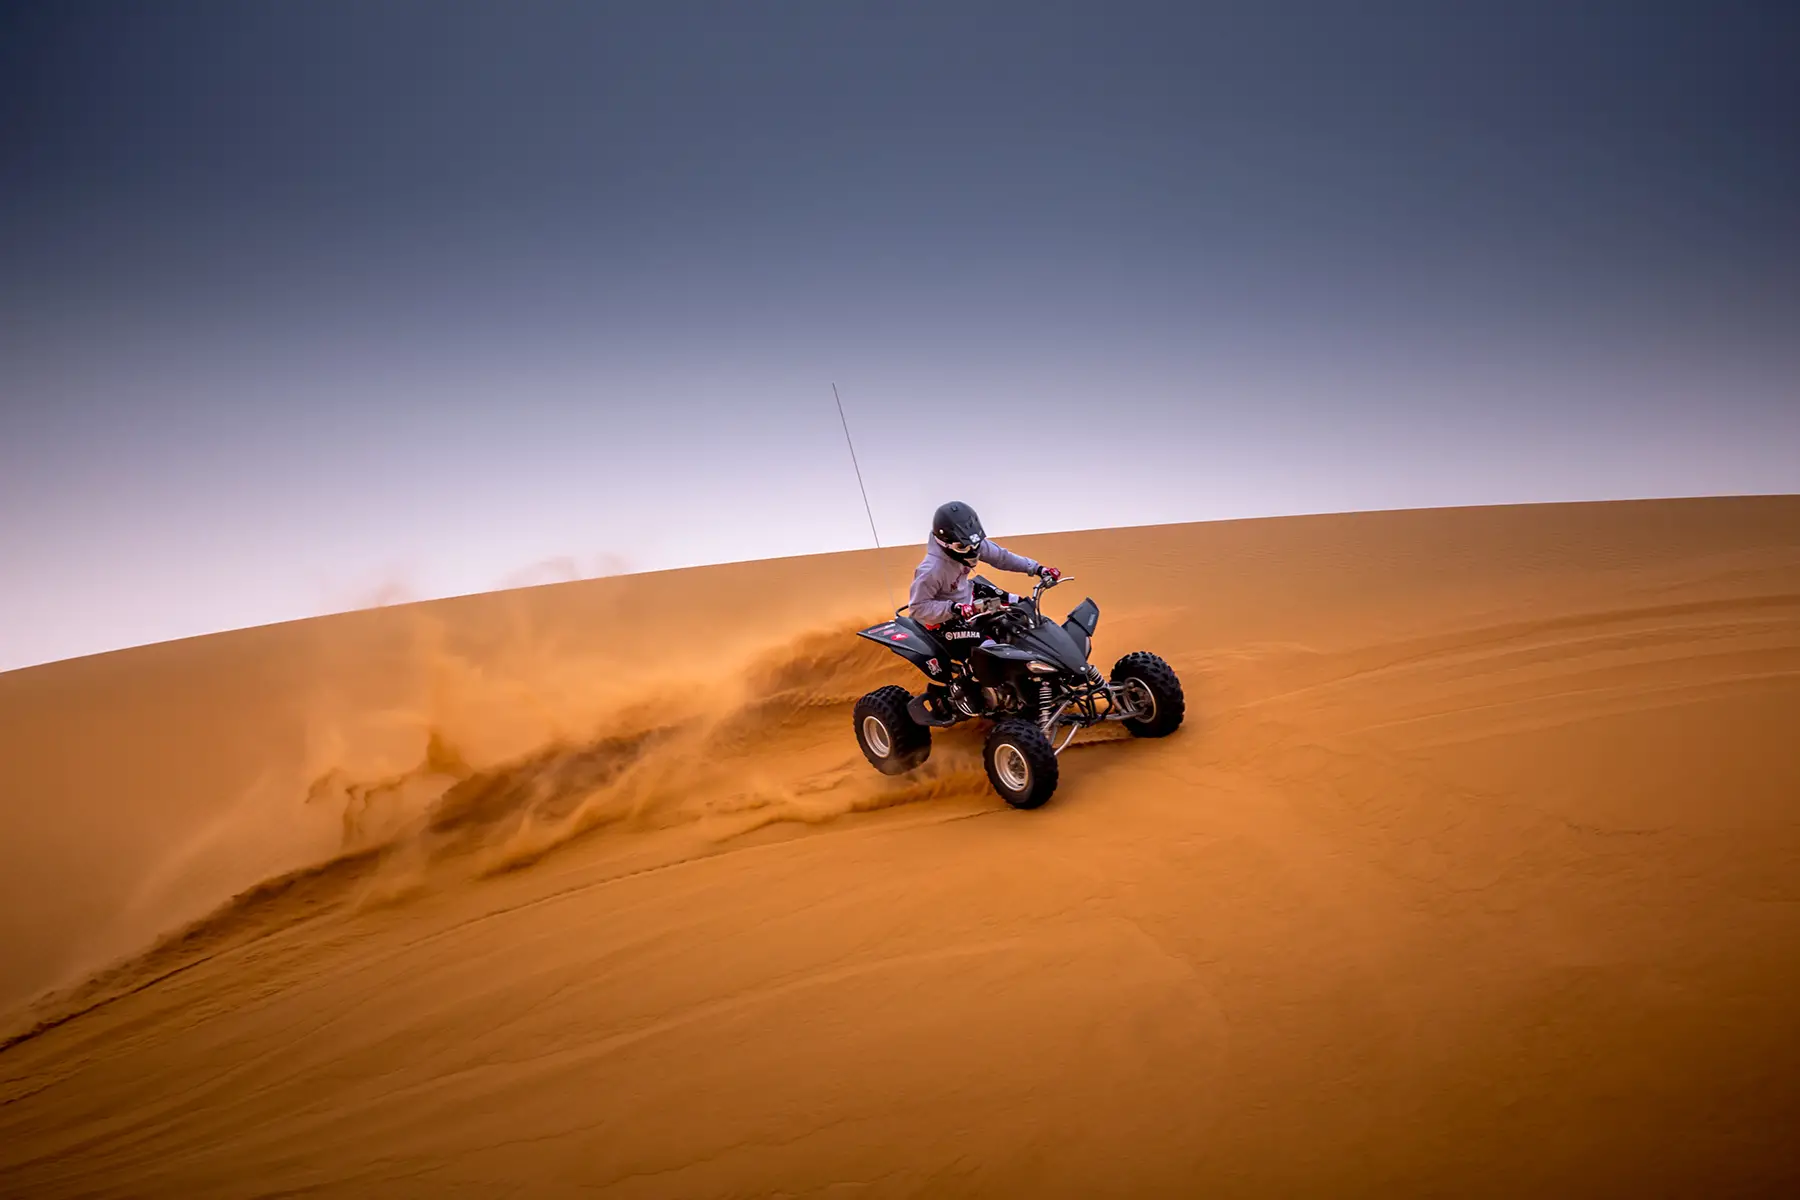 Quad surfing on a dune in Saudi Arabia